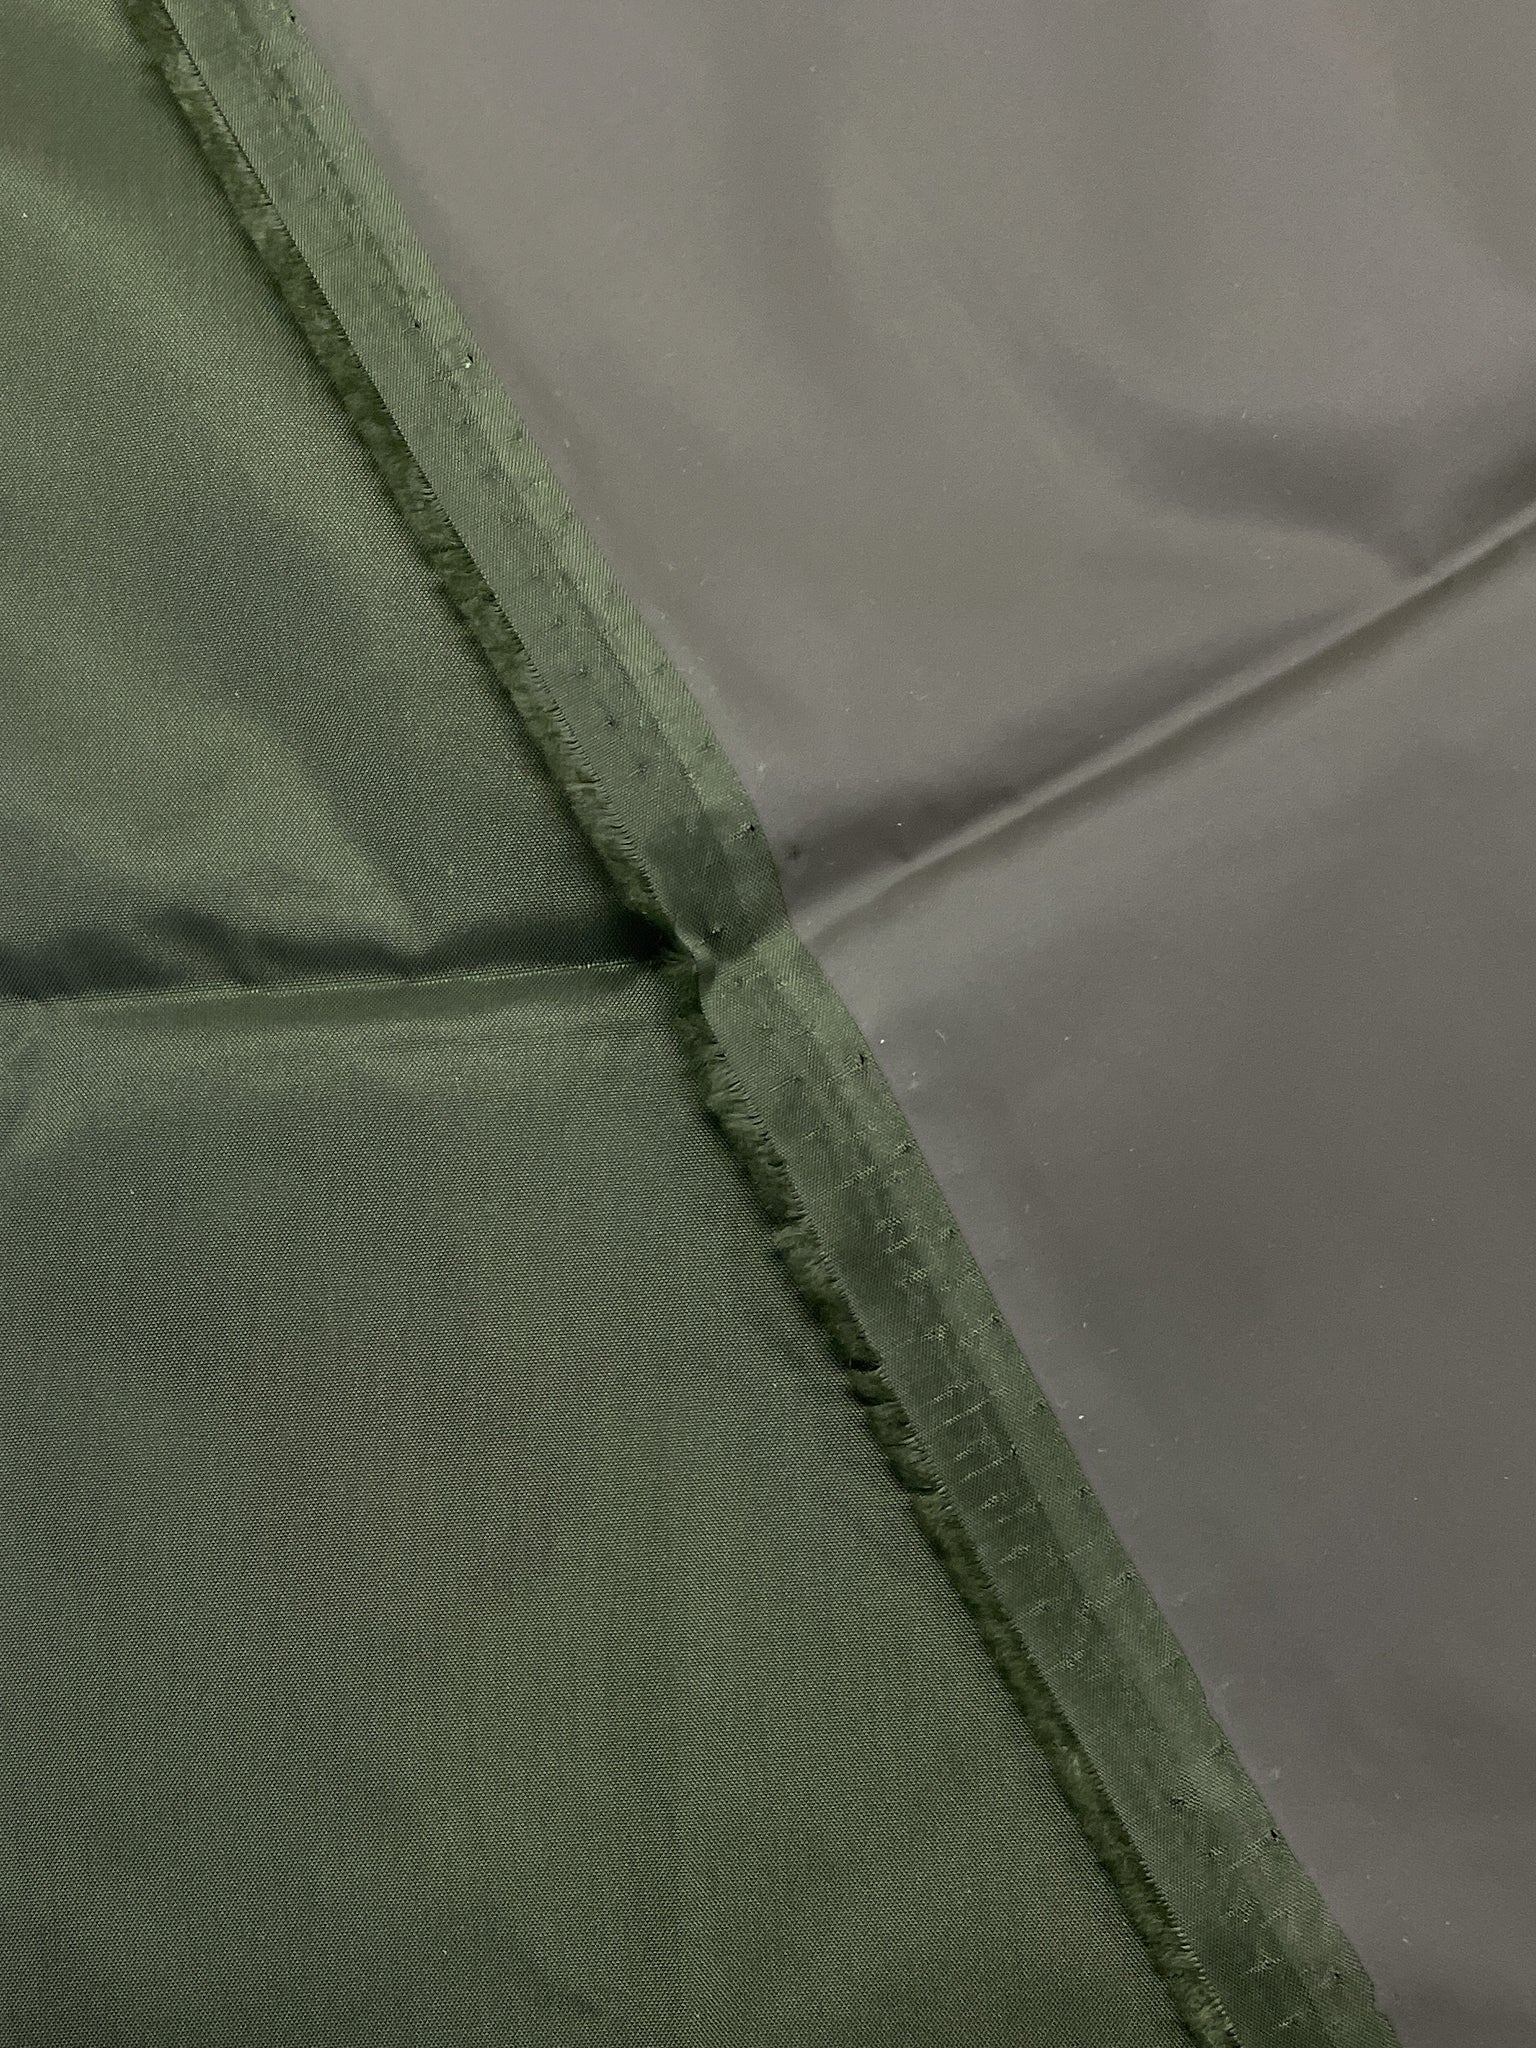 1 YD Waterproof Polyester Taffeta - Dark Army Green with Black Backing